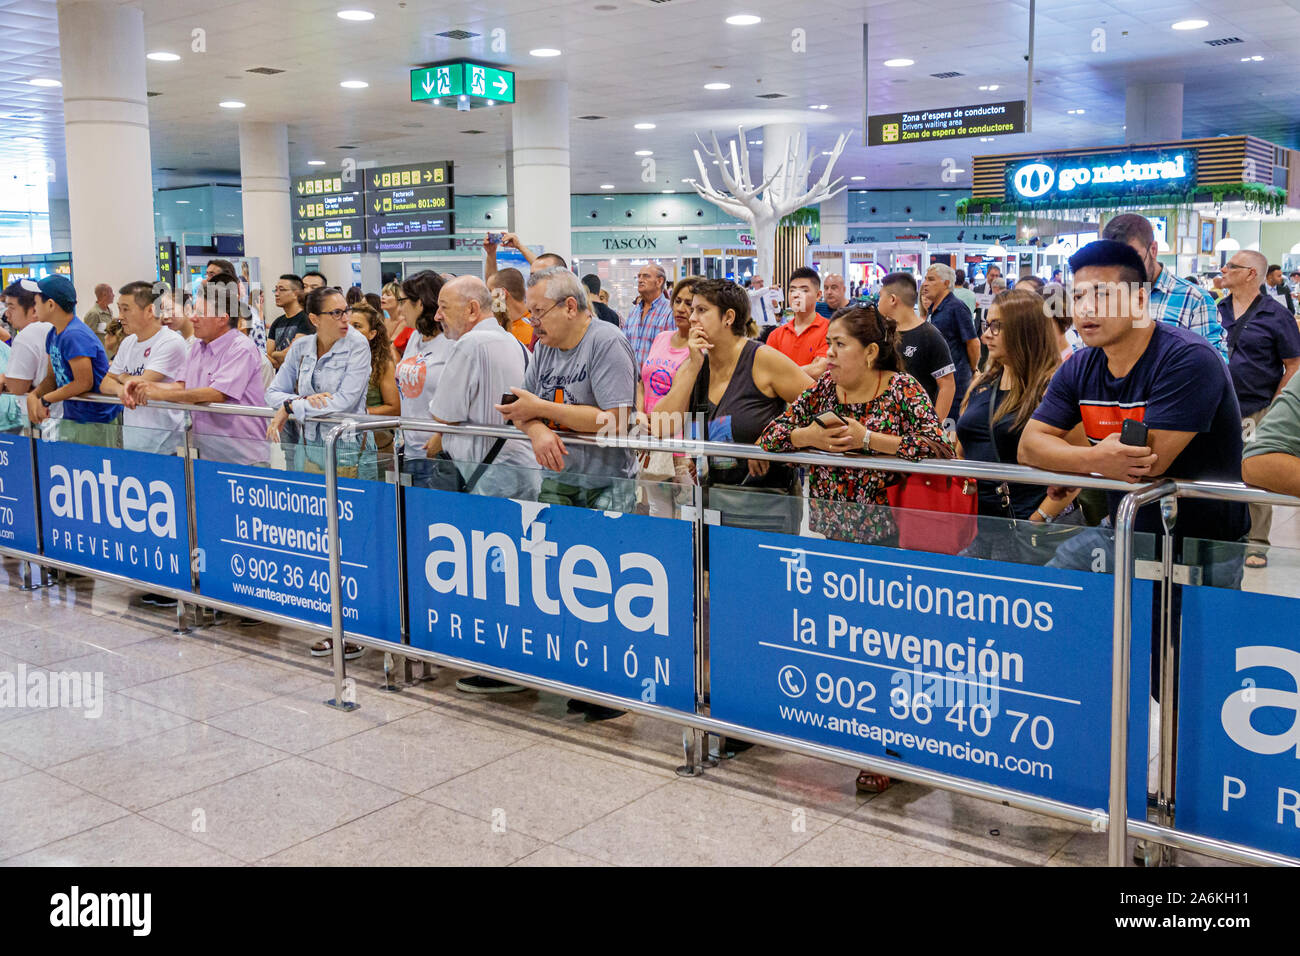 Barcelona Spain,Catalonia Barcelona-El Prat Josep Airport BCN,international arrivals,terminal,crowd control barrier,awaiting waiting arriving passenge Stock Photo